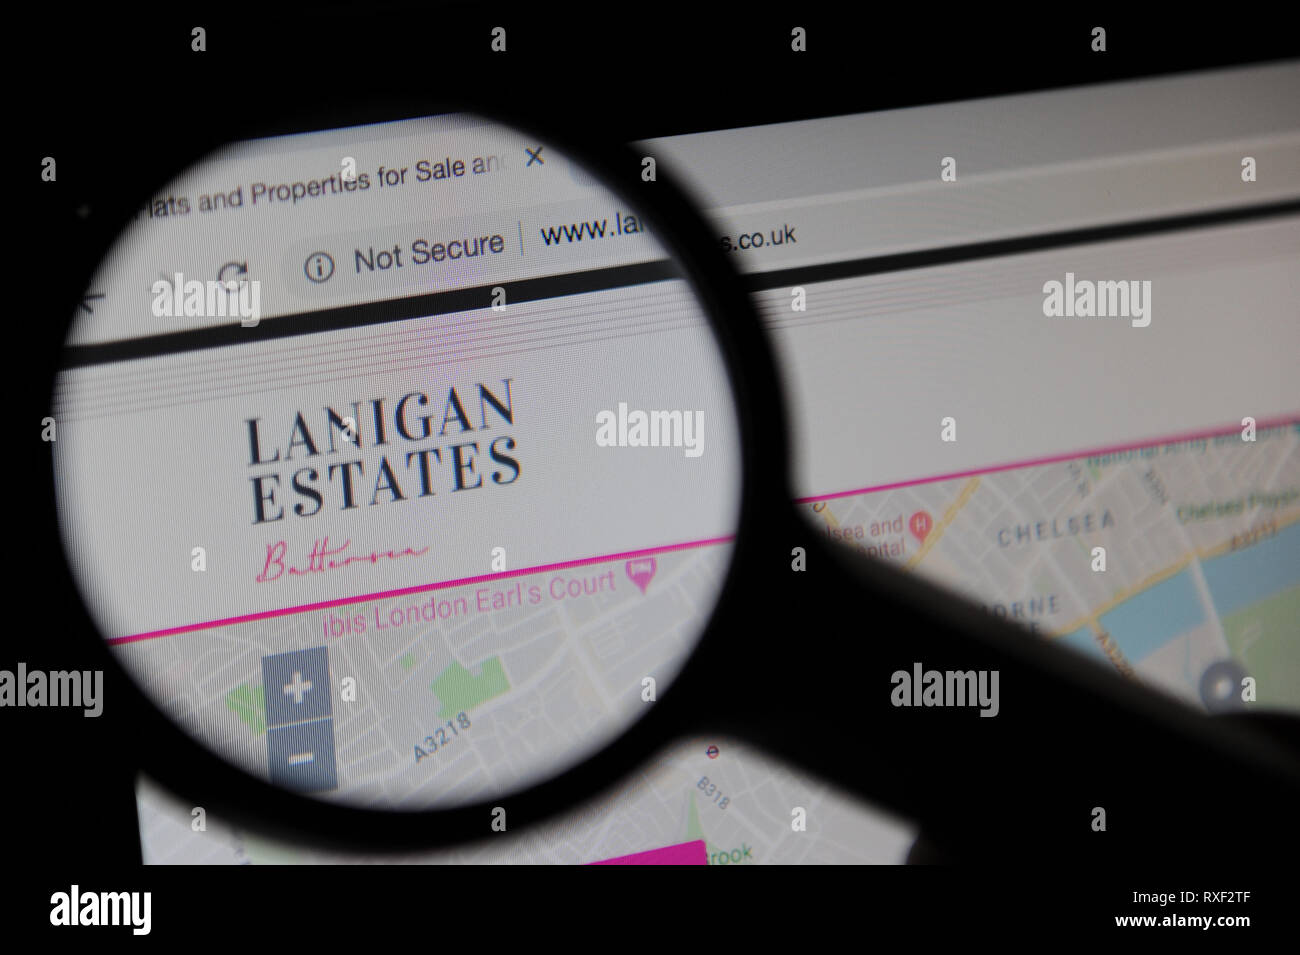 Lanigan Estate Agent's website vistos a través de una lupa Foto de stock